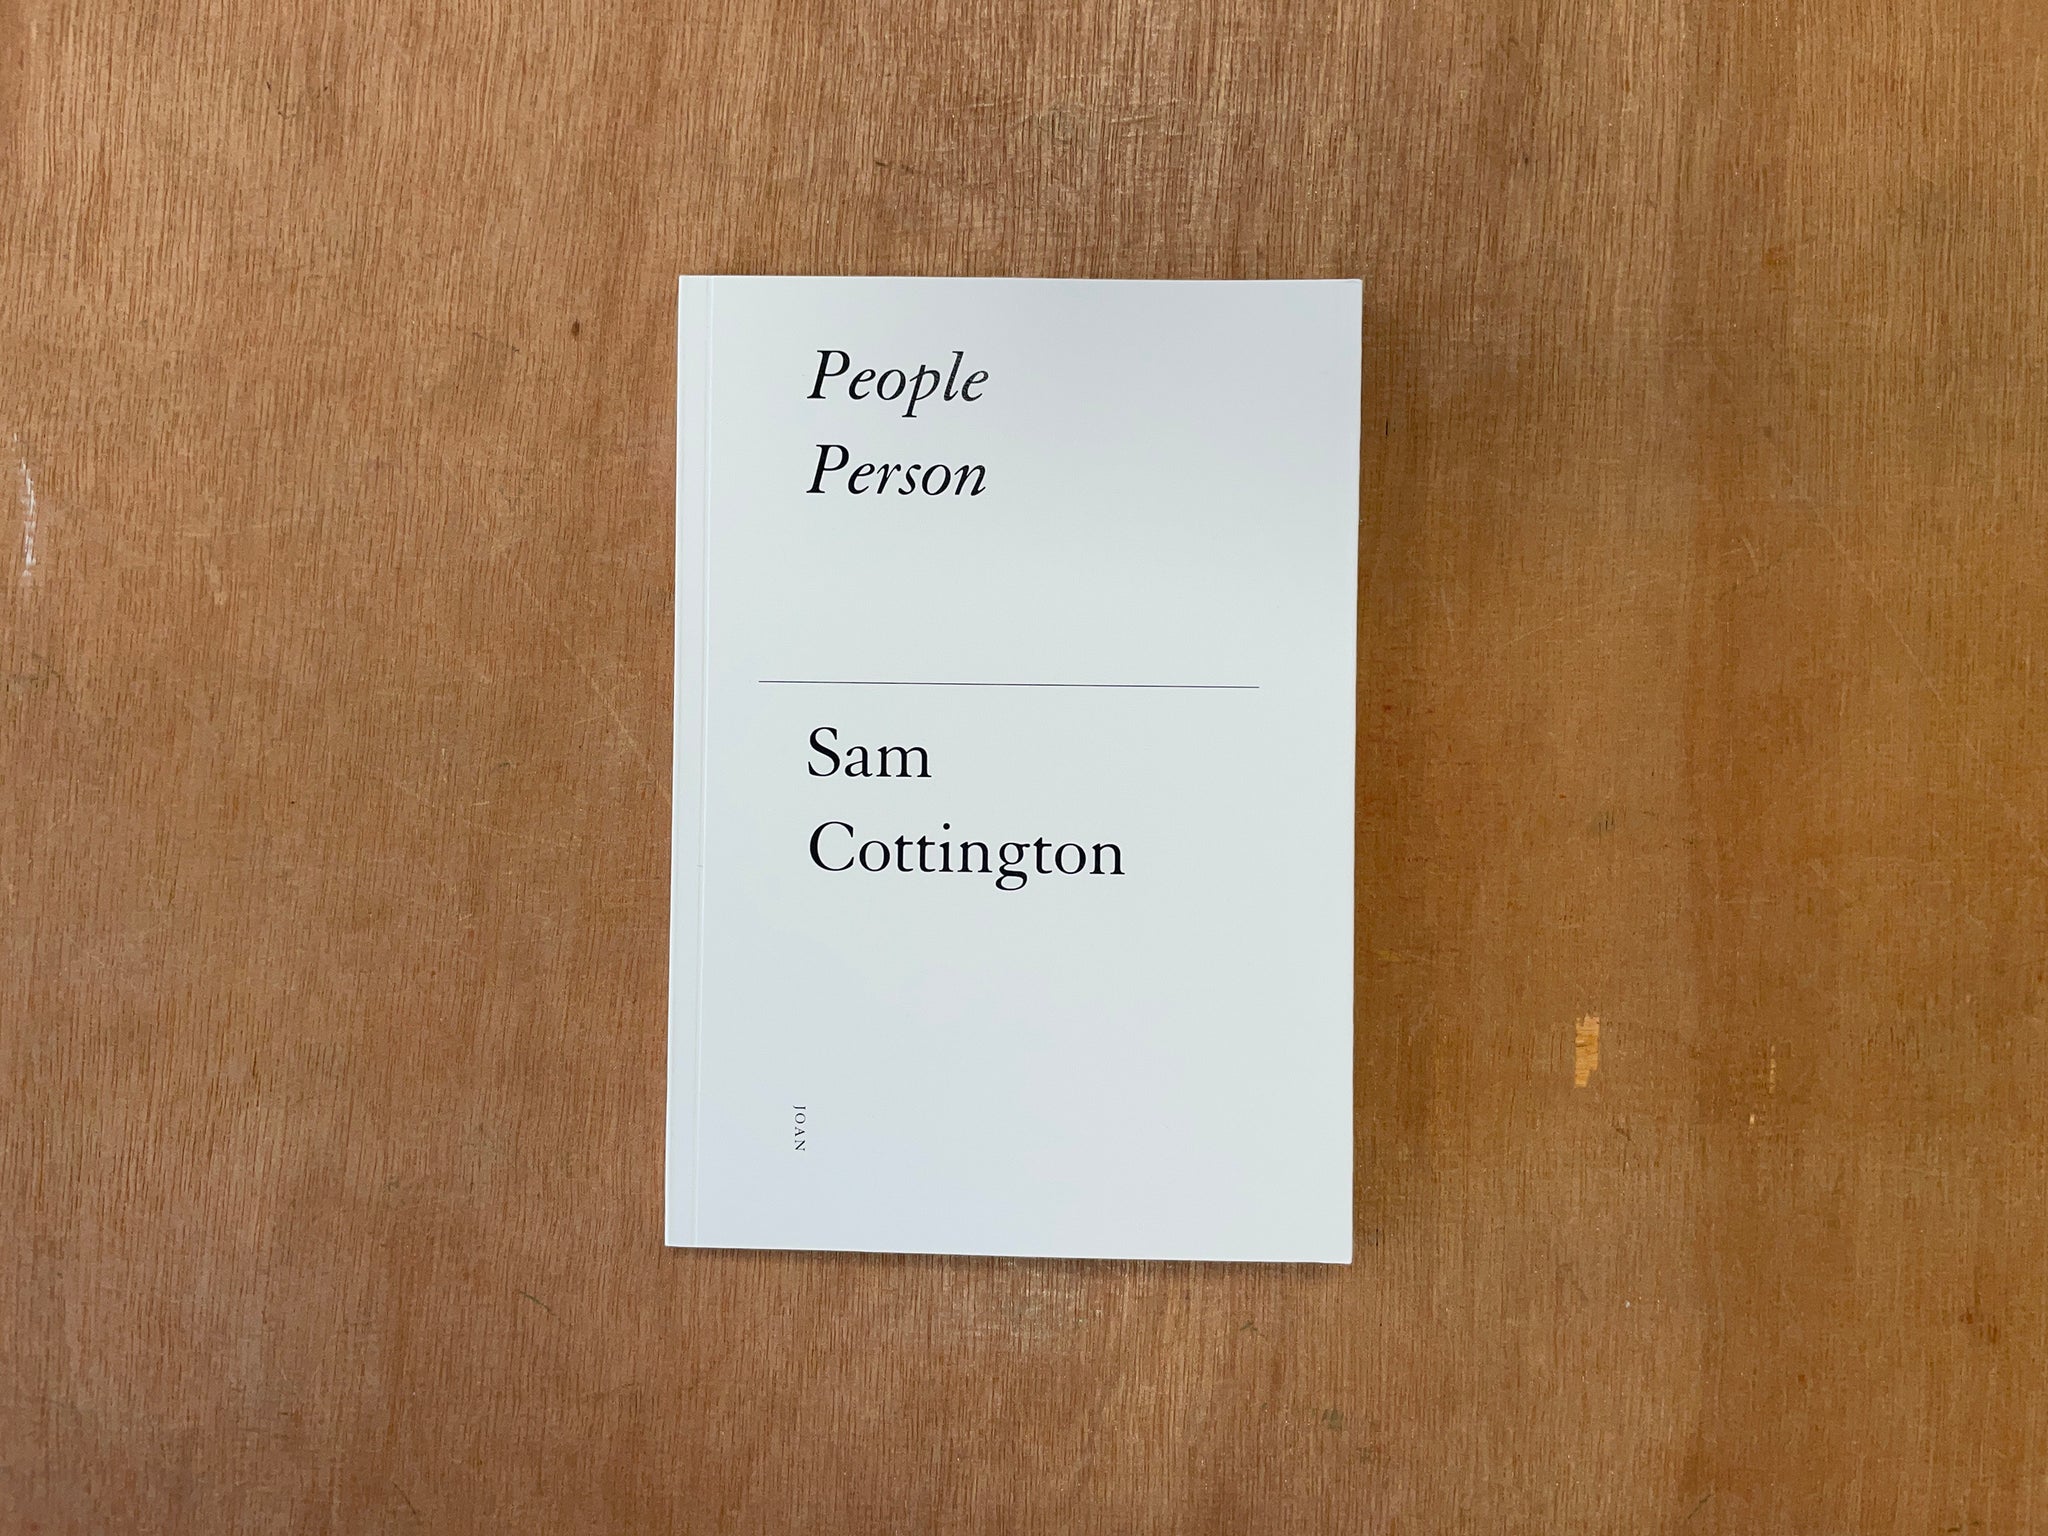 PEOPLE PERSON by Sam Cottington